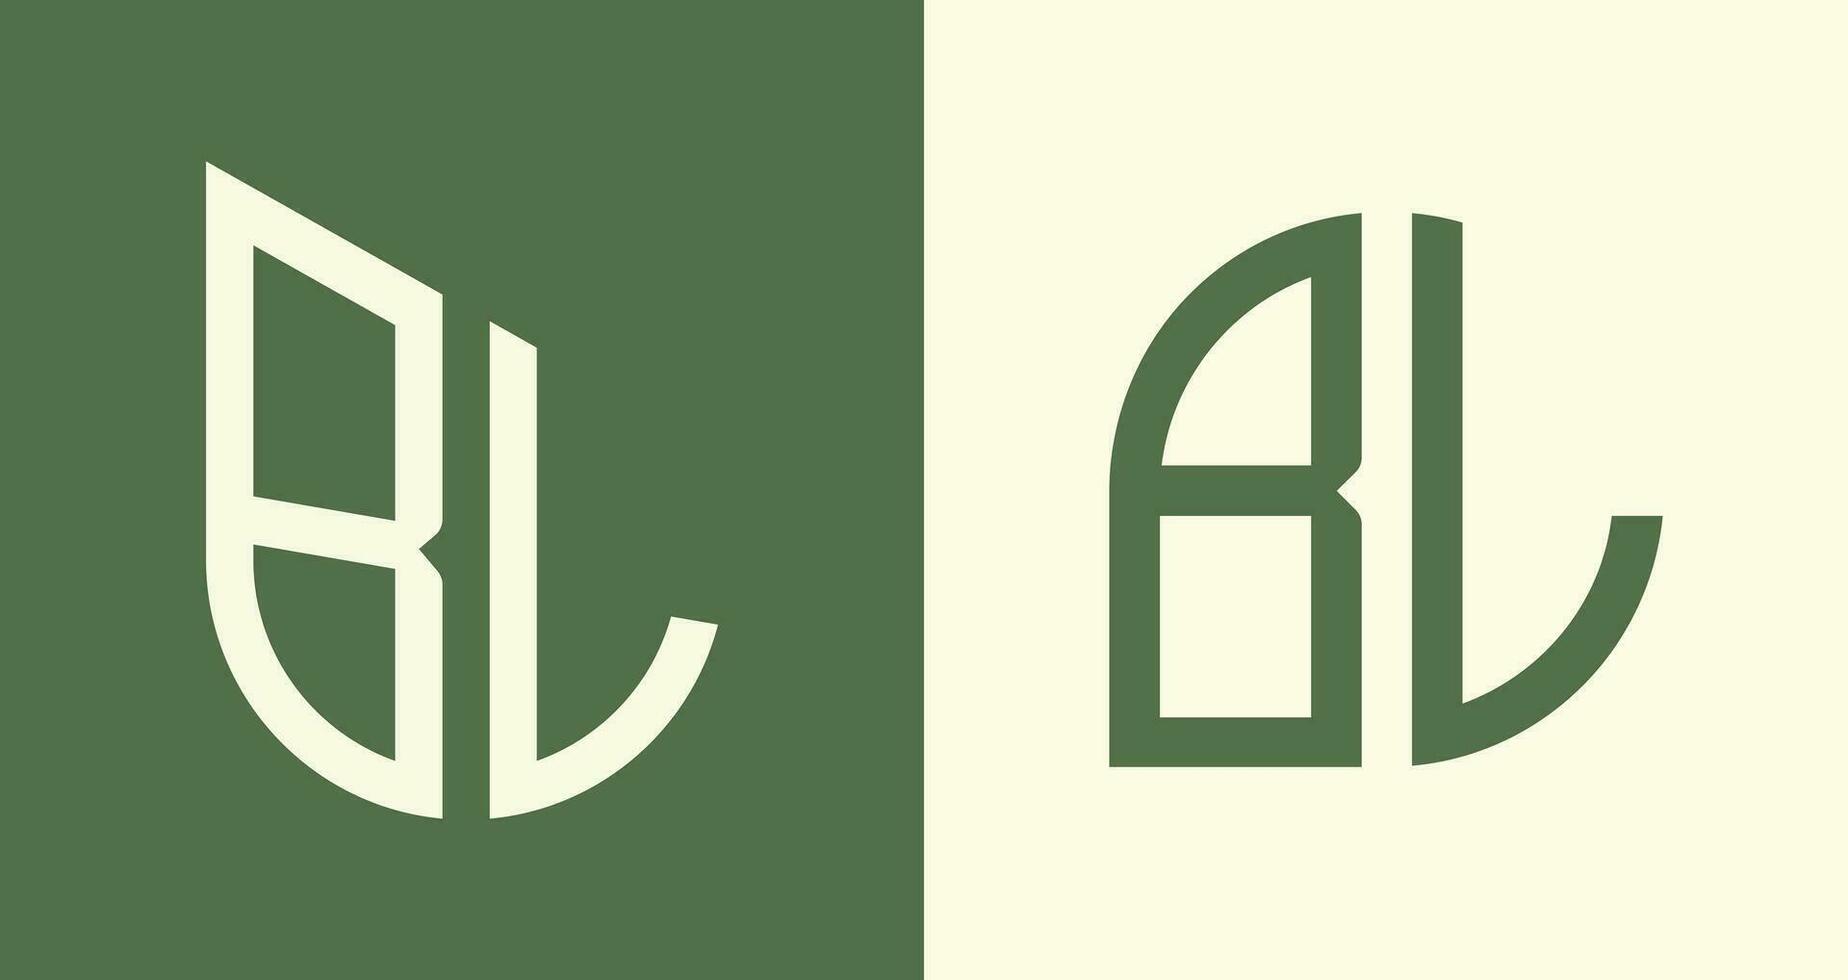 kreative einfache anfangsbuchstaben bl logo designs paket. vektor